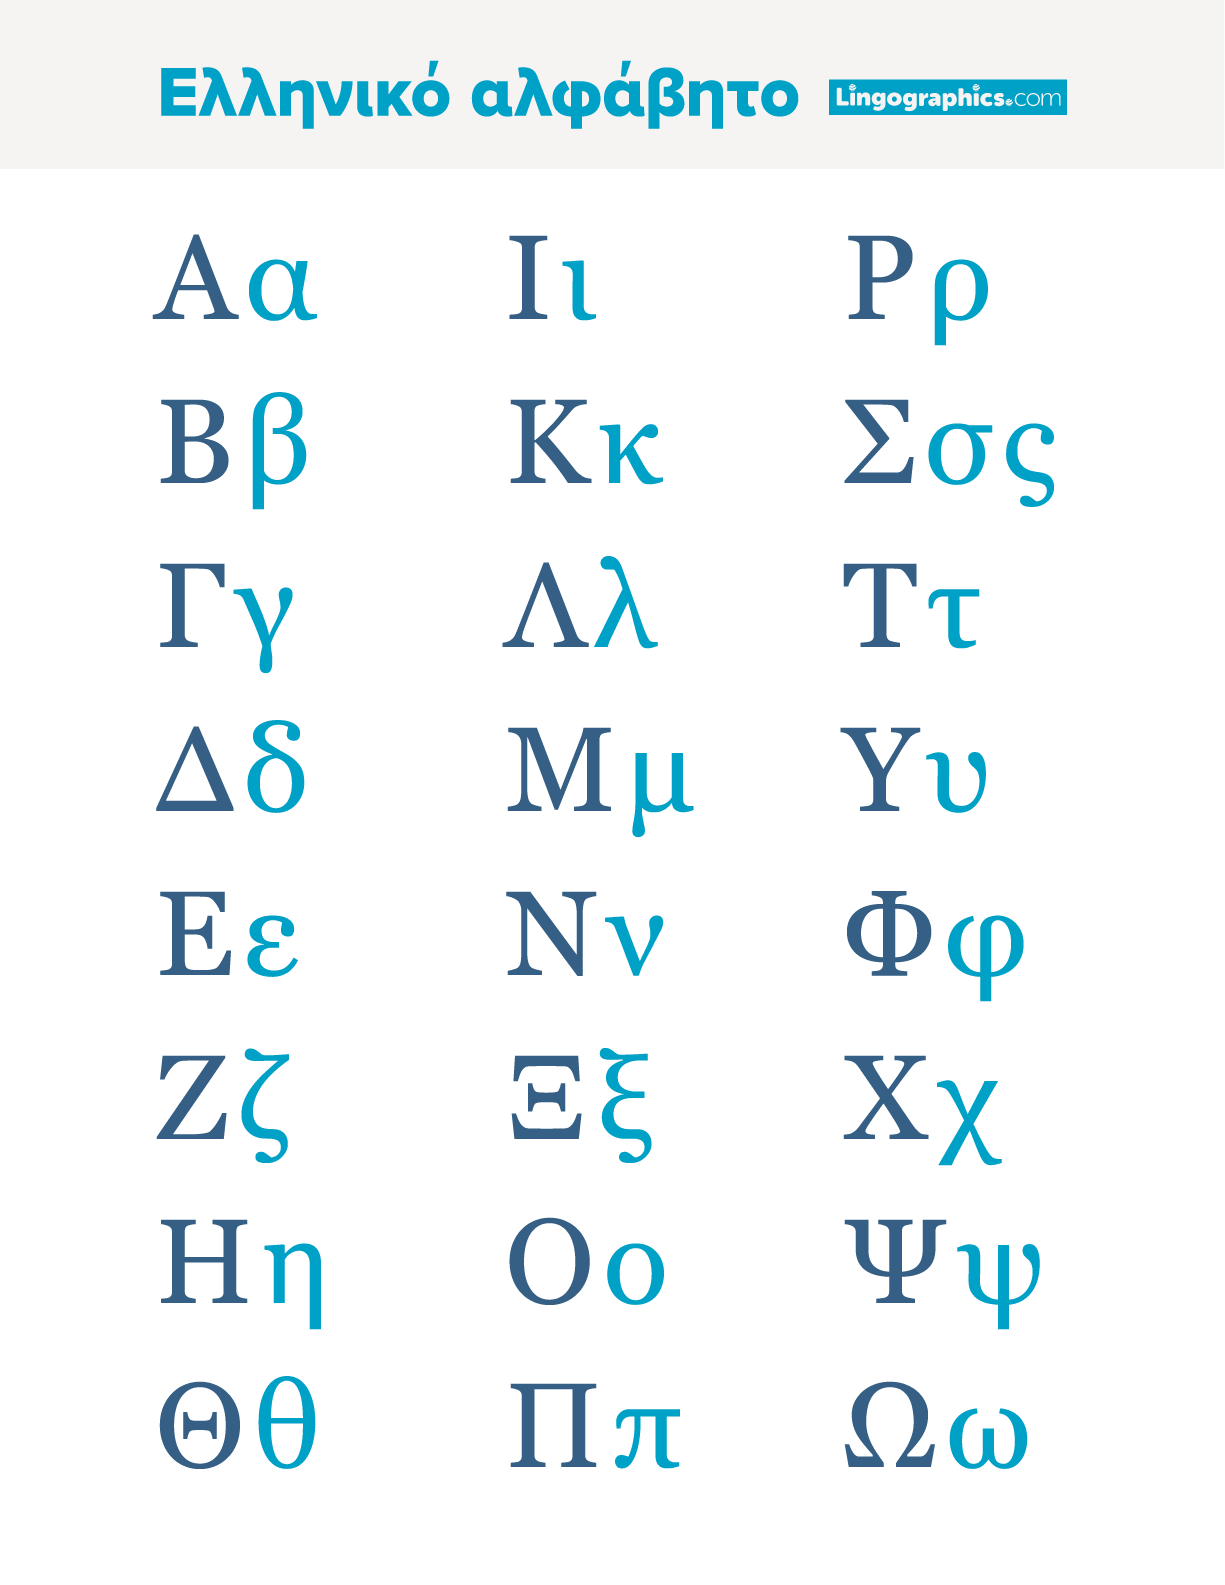 greek-alphabet-cheat-sheet-lingographics